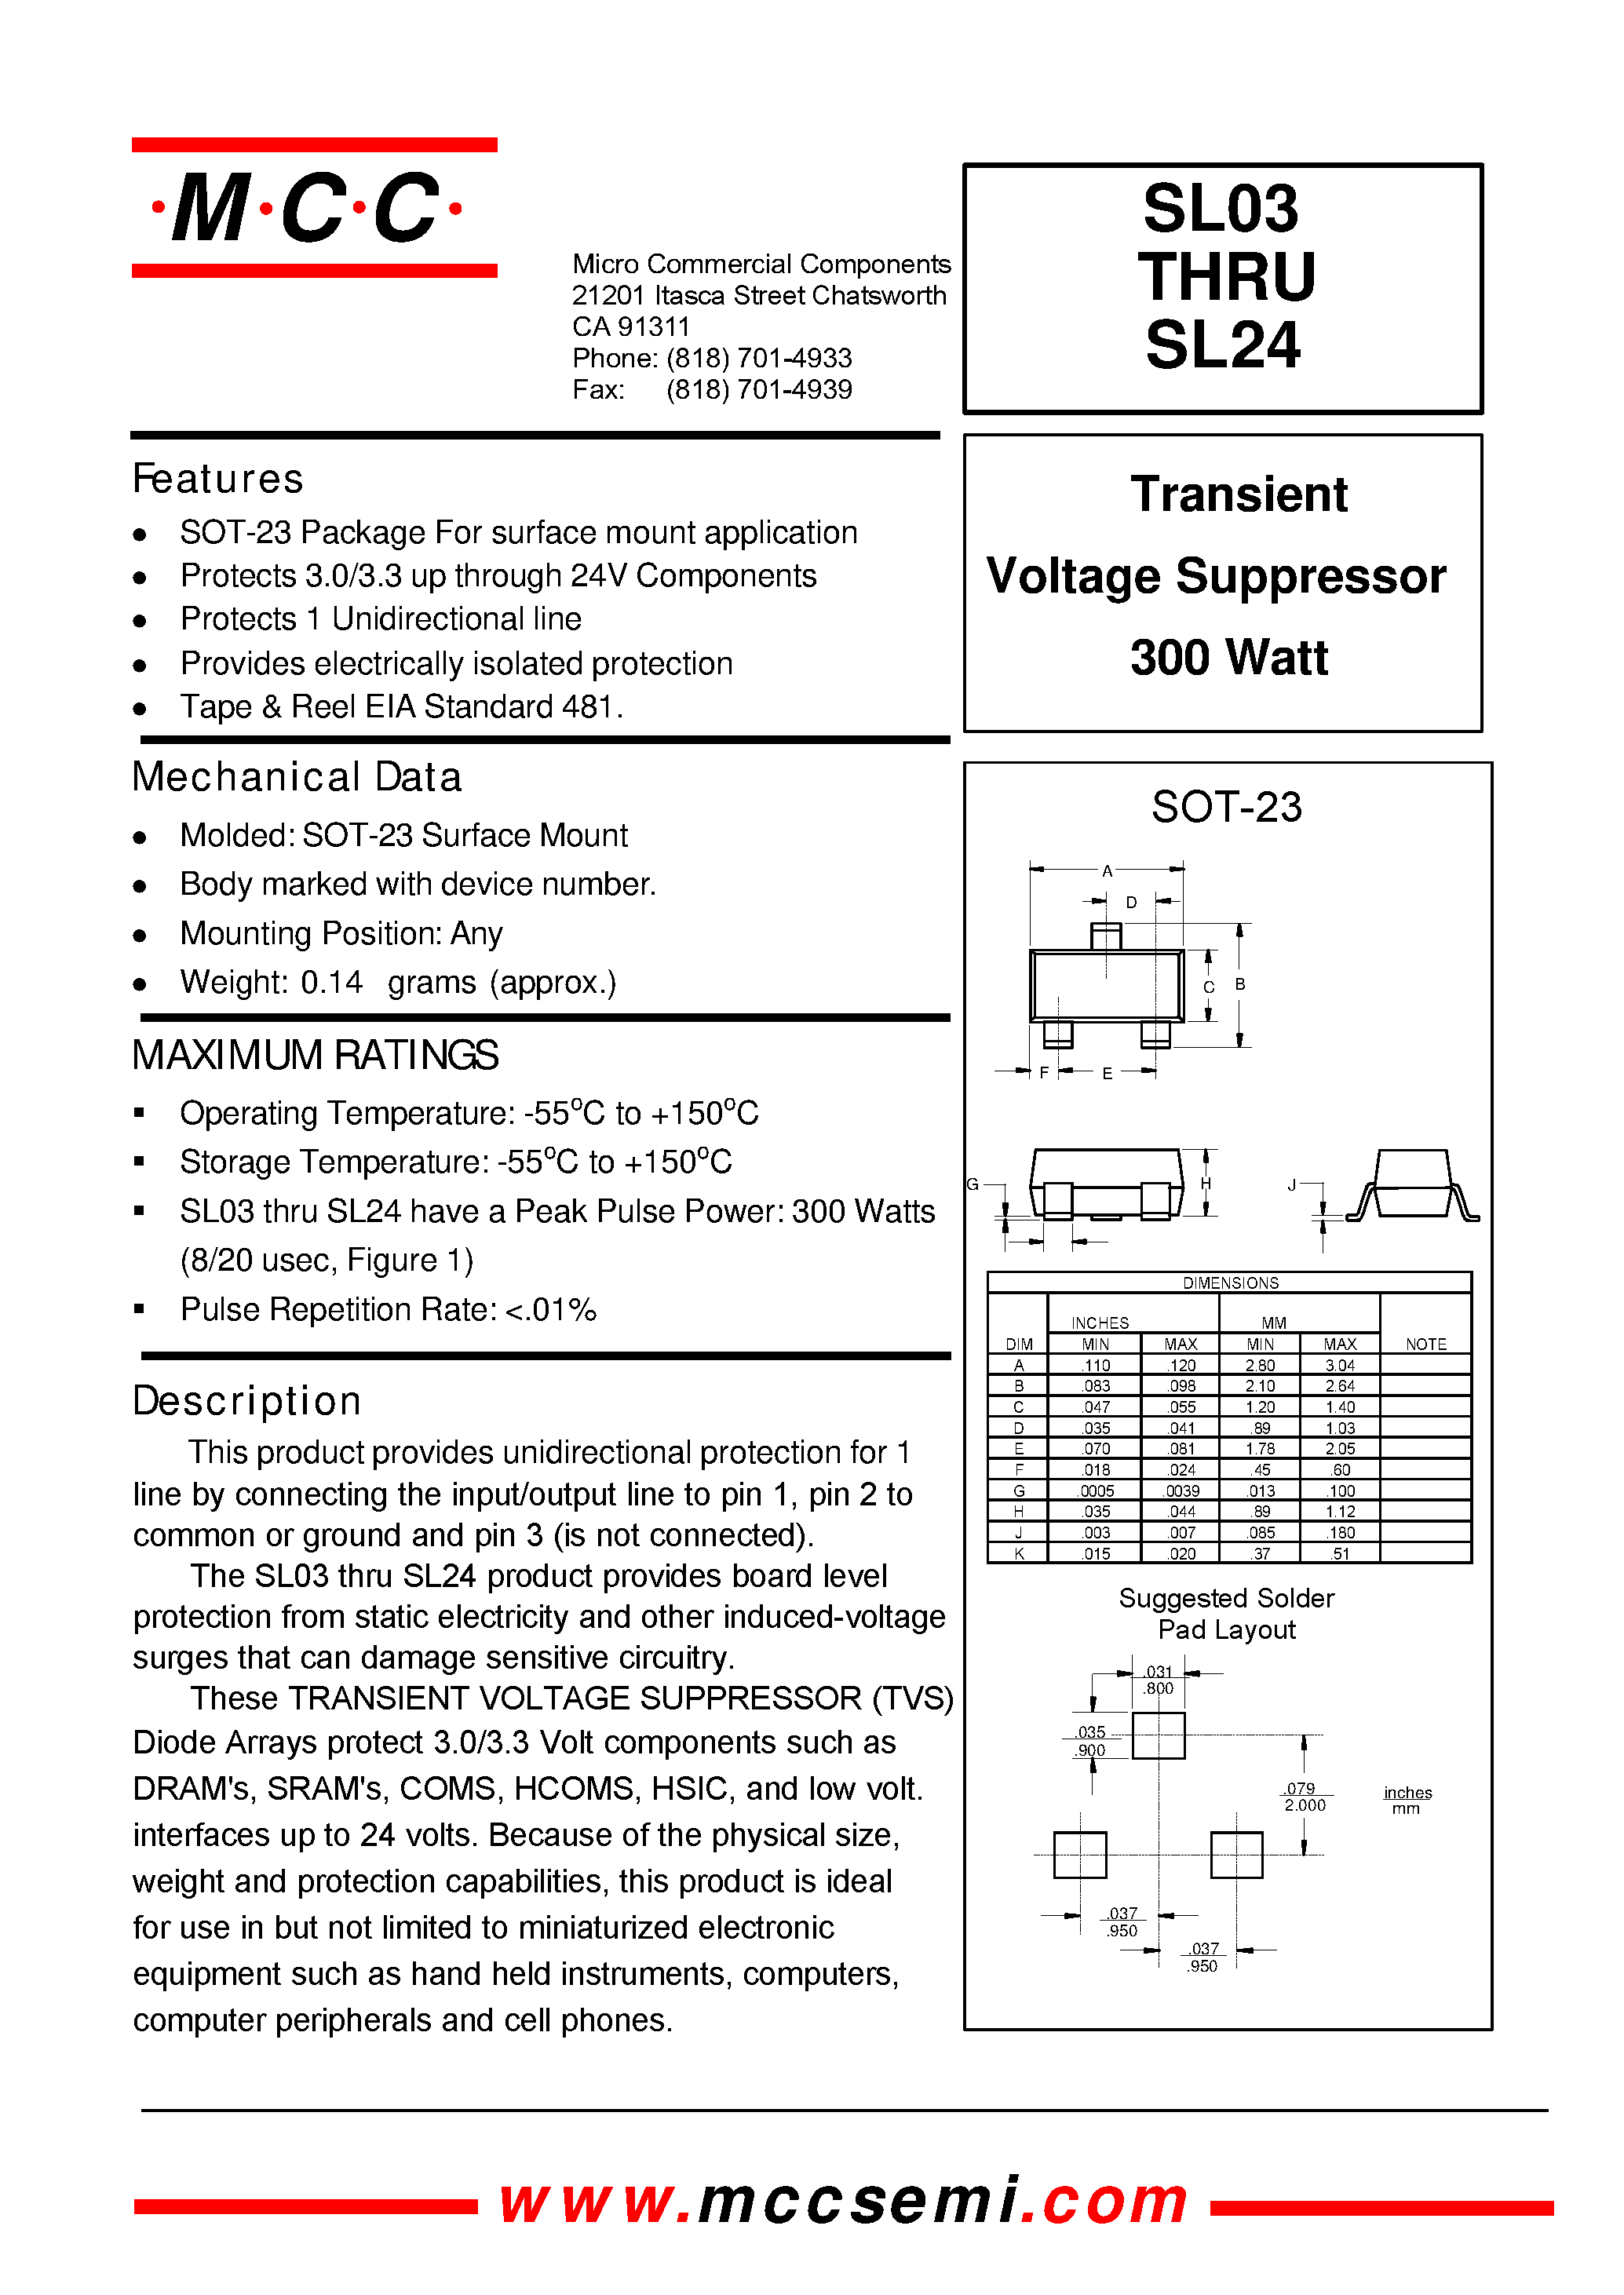 Даташит SL24 - Transient Voltage Suppressor 300 Watt страница 1